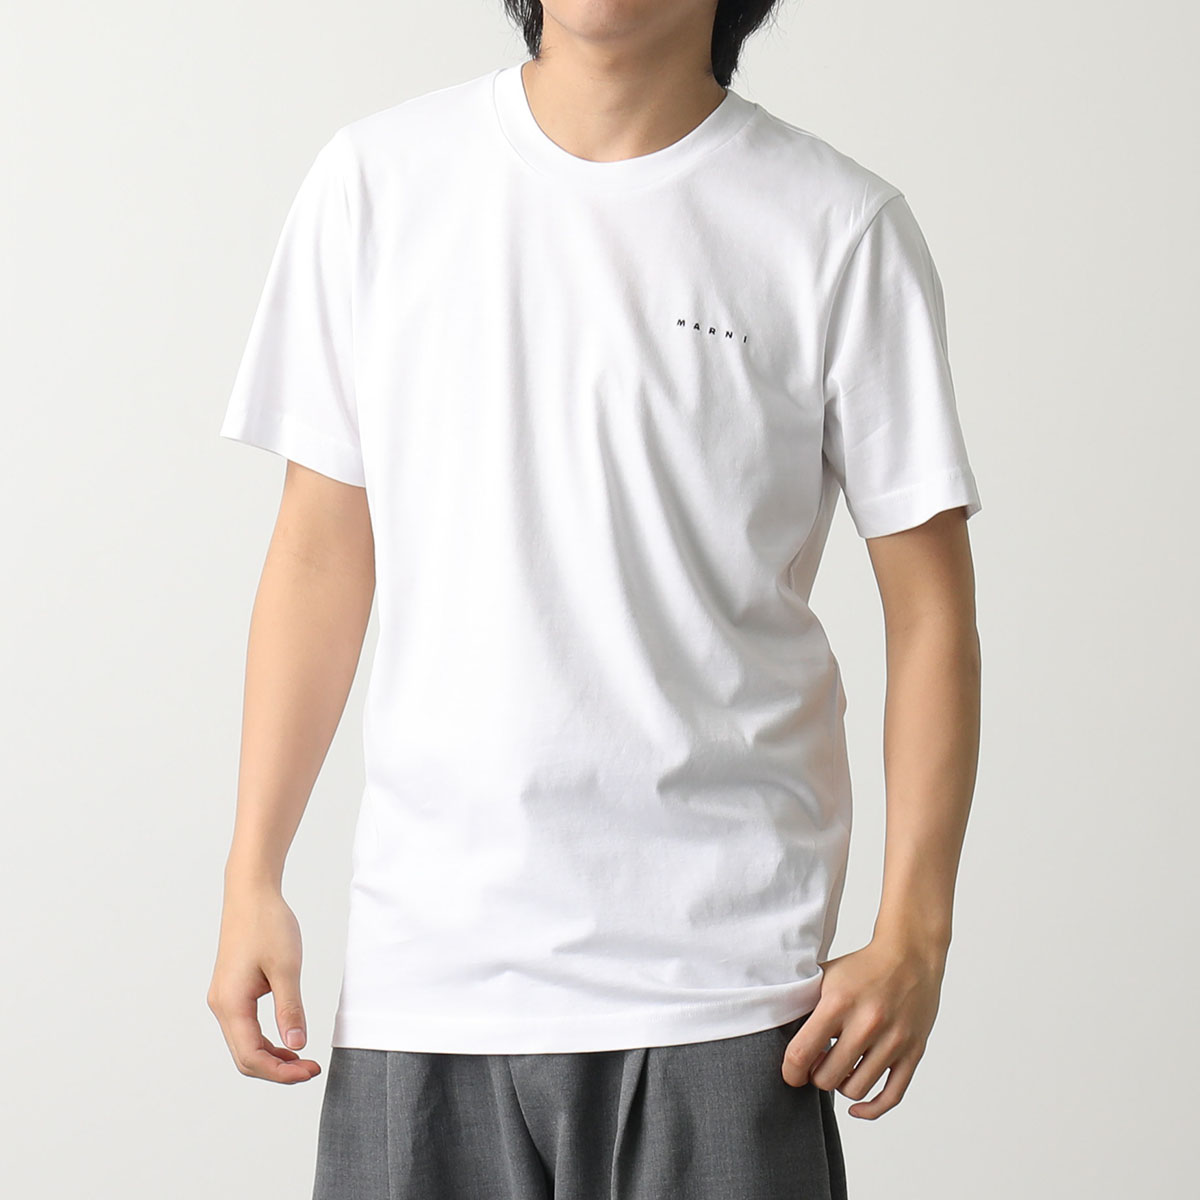 MARNI マルニ Tシャツ HUMU0198X1 UTCZ57 メンズ 半袖 カットソー 刺繍 ち...